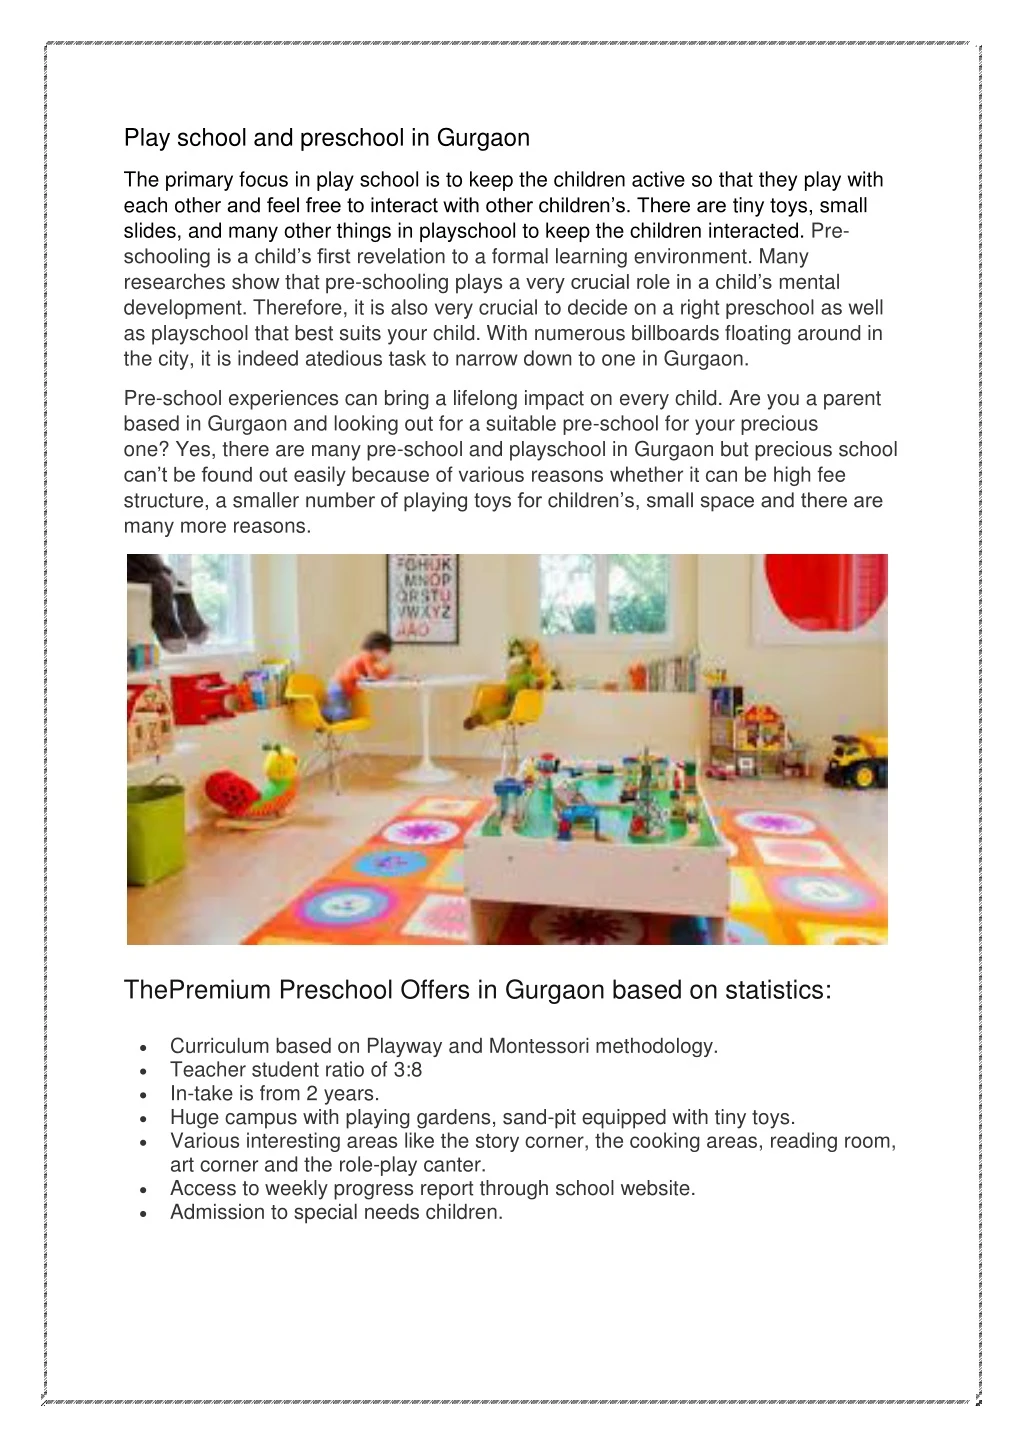 play school and preschool in gurgaon